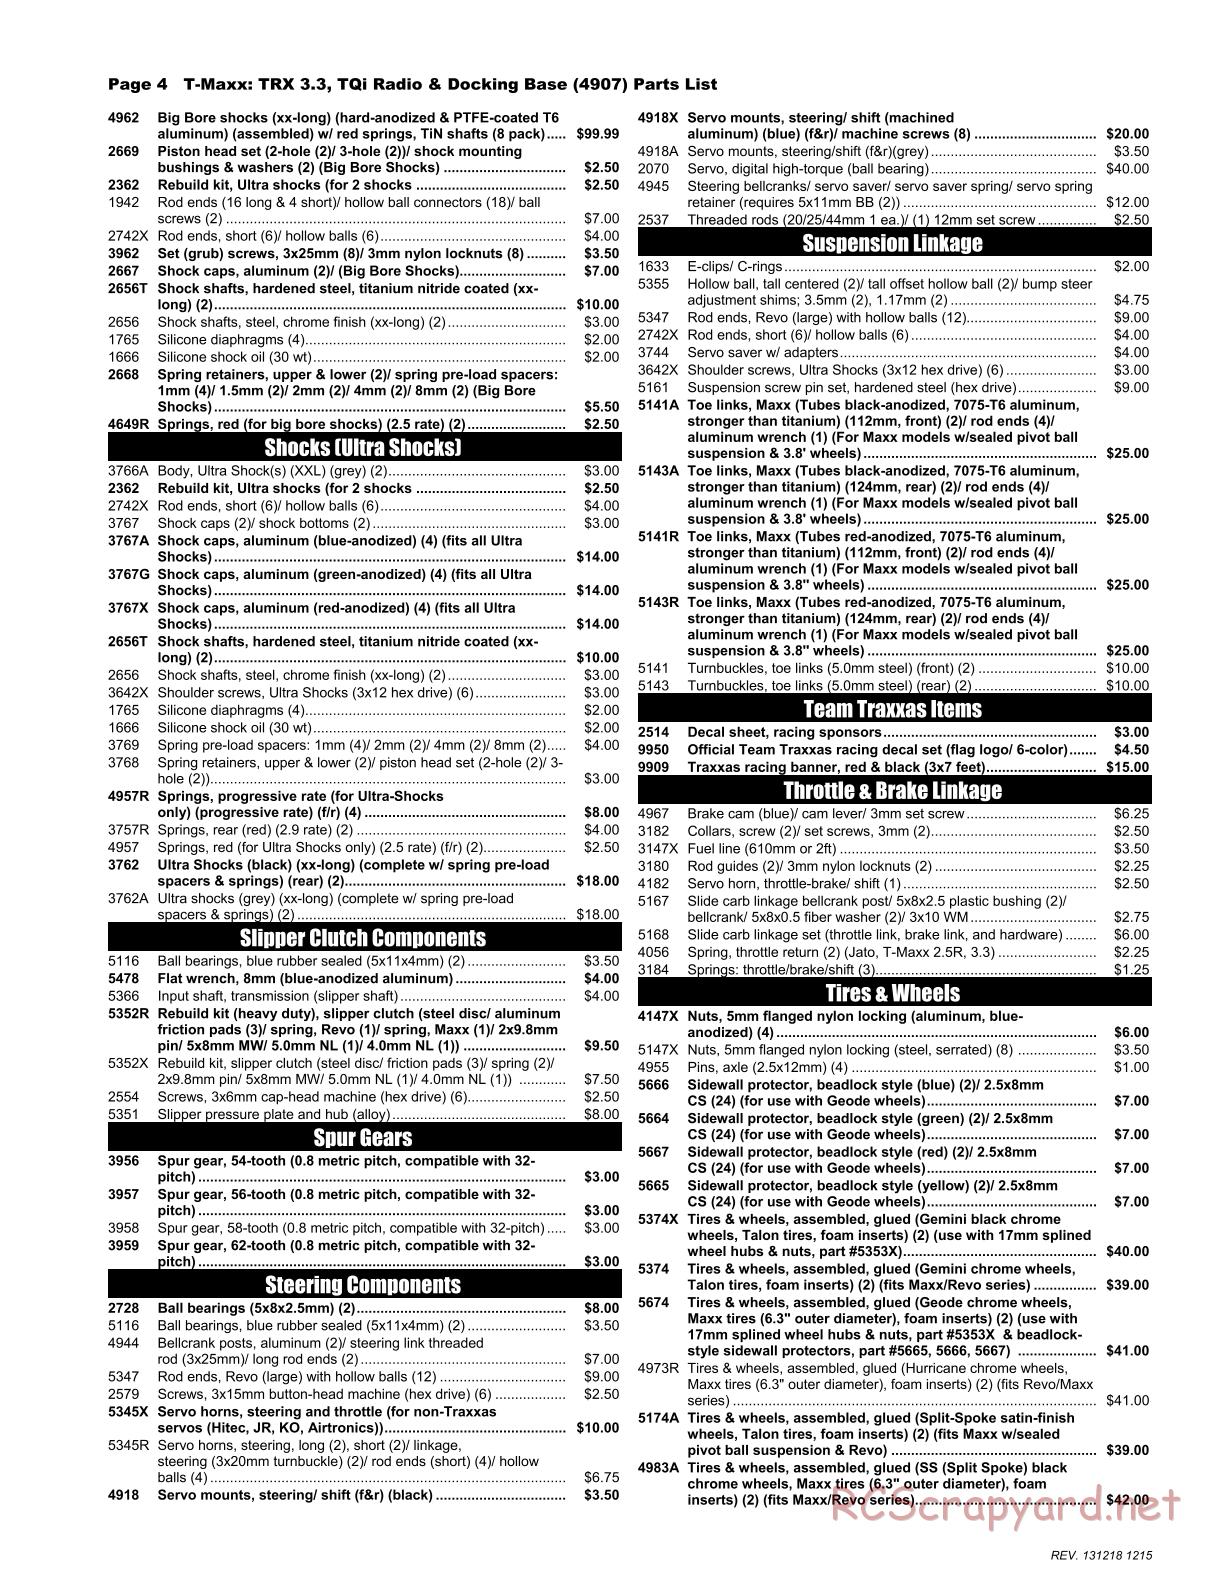 Traxxas - T-Maxx 3.3 (2010) - Parts List - Page 4